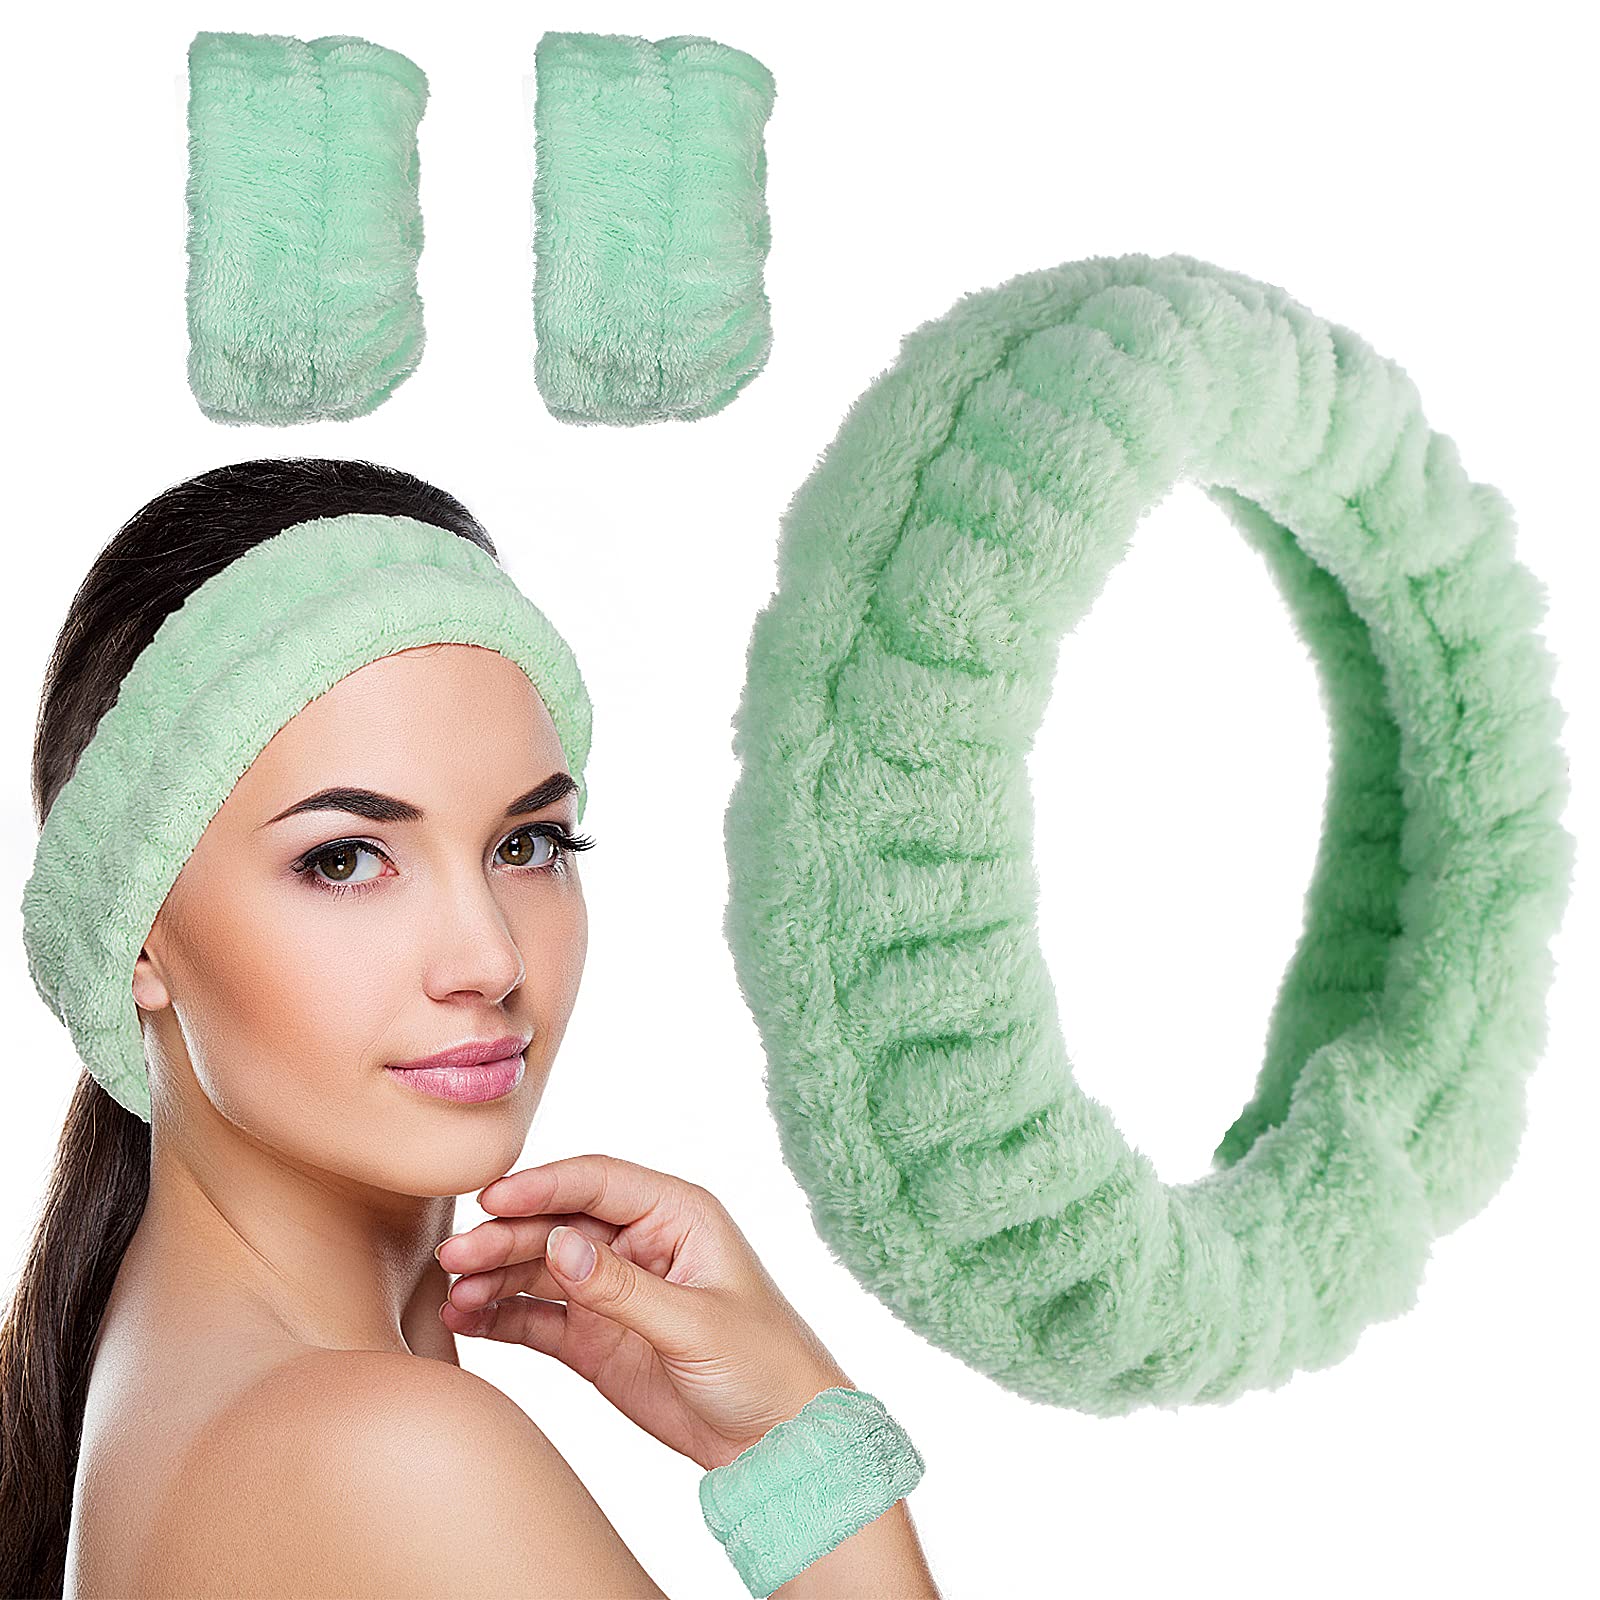 Luluo Spa Headband Women Microfiber Facial Makeup Hairband with